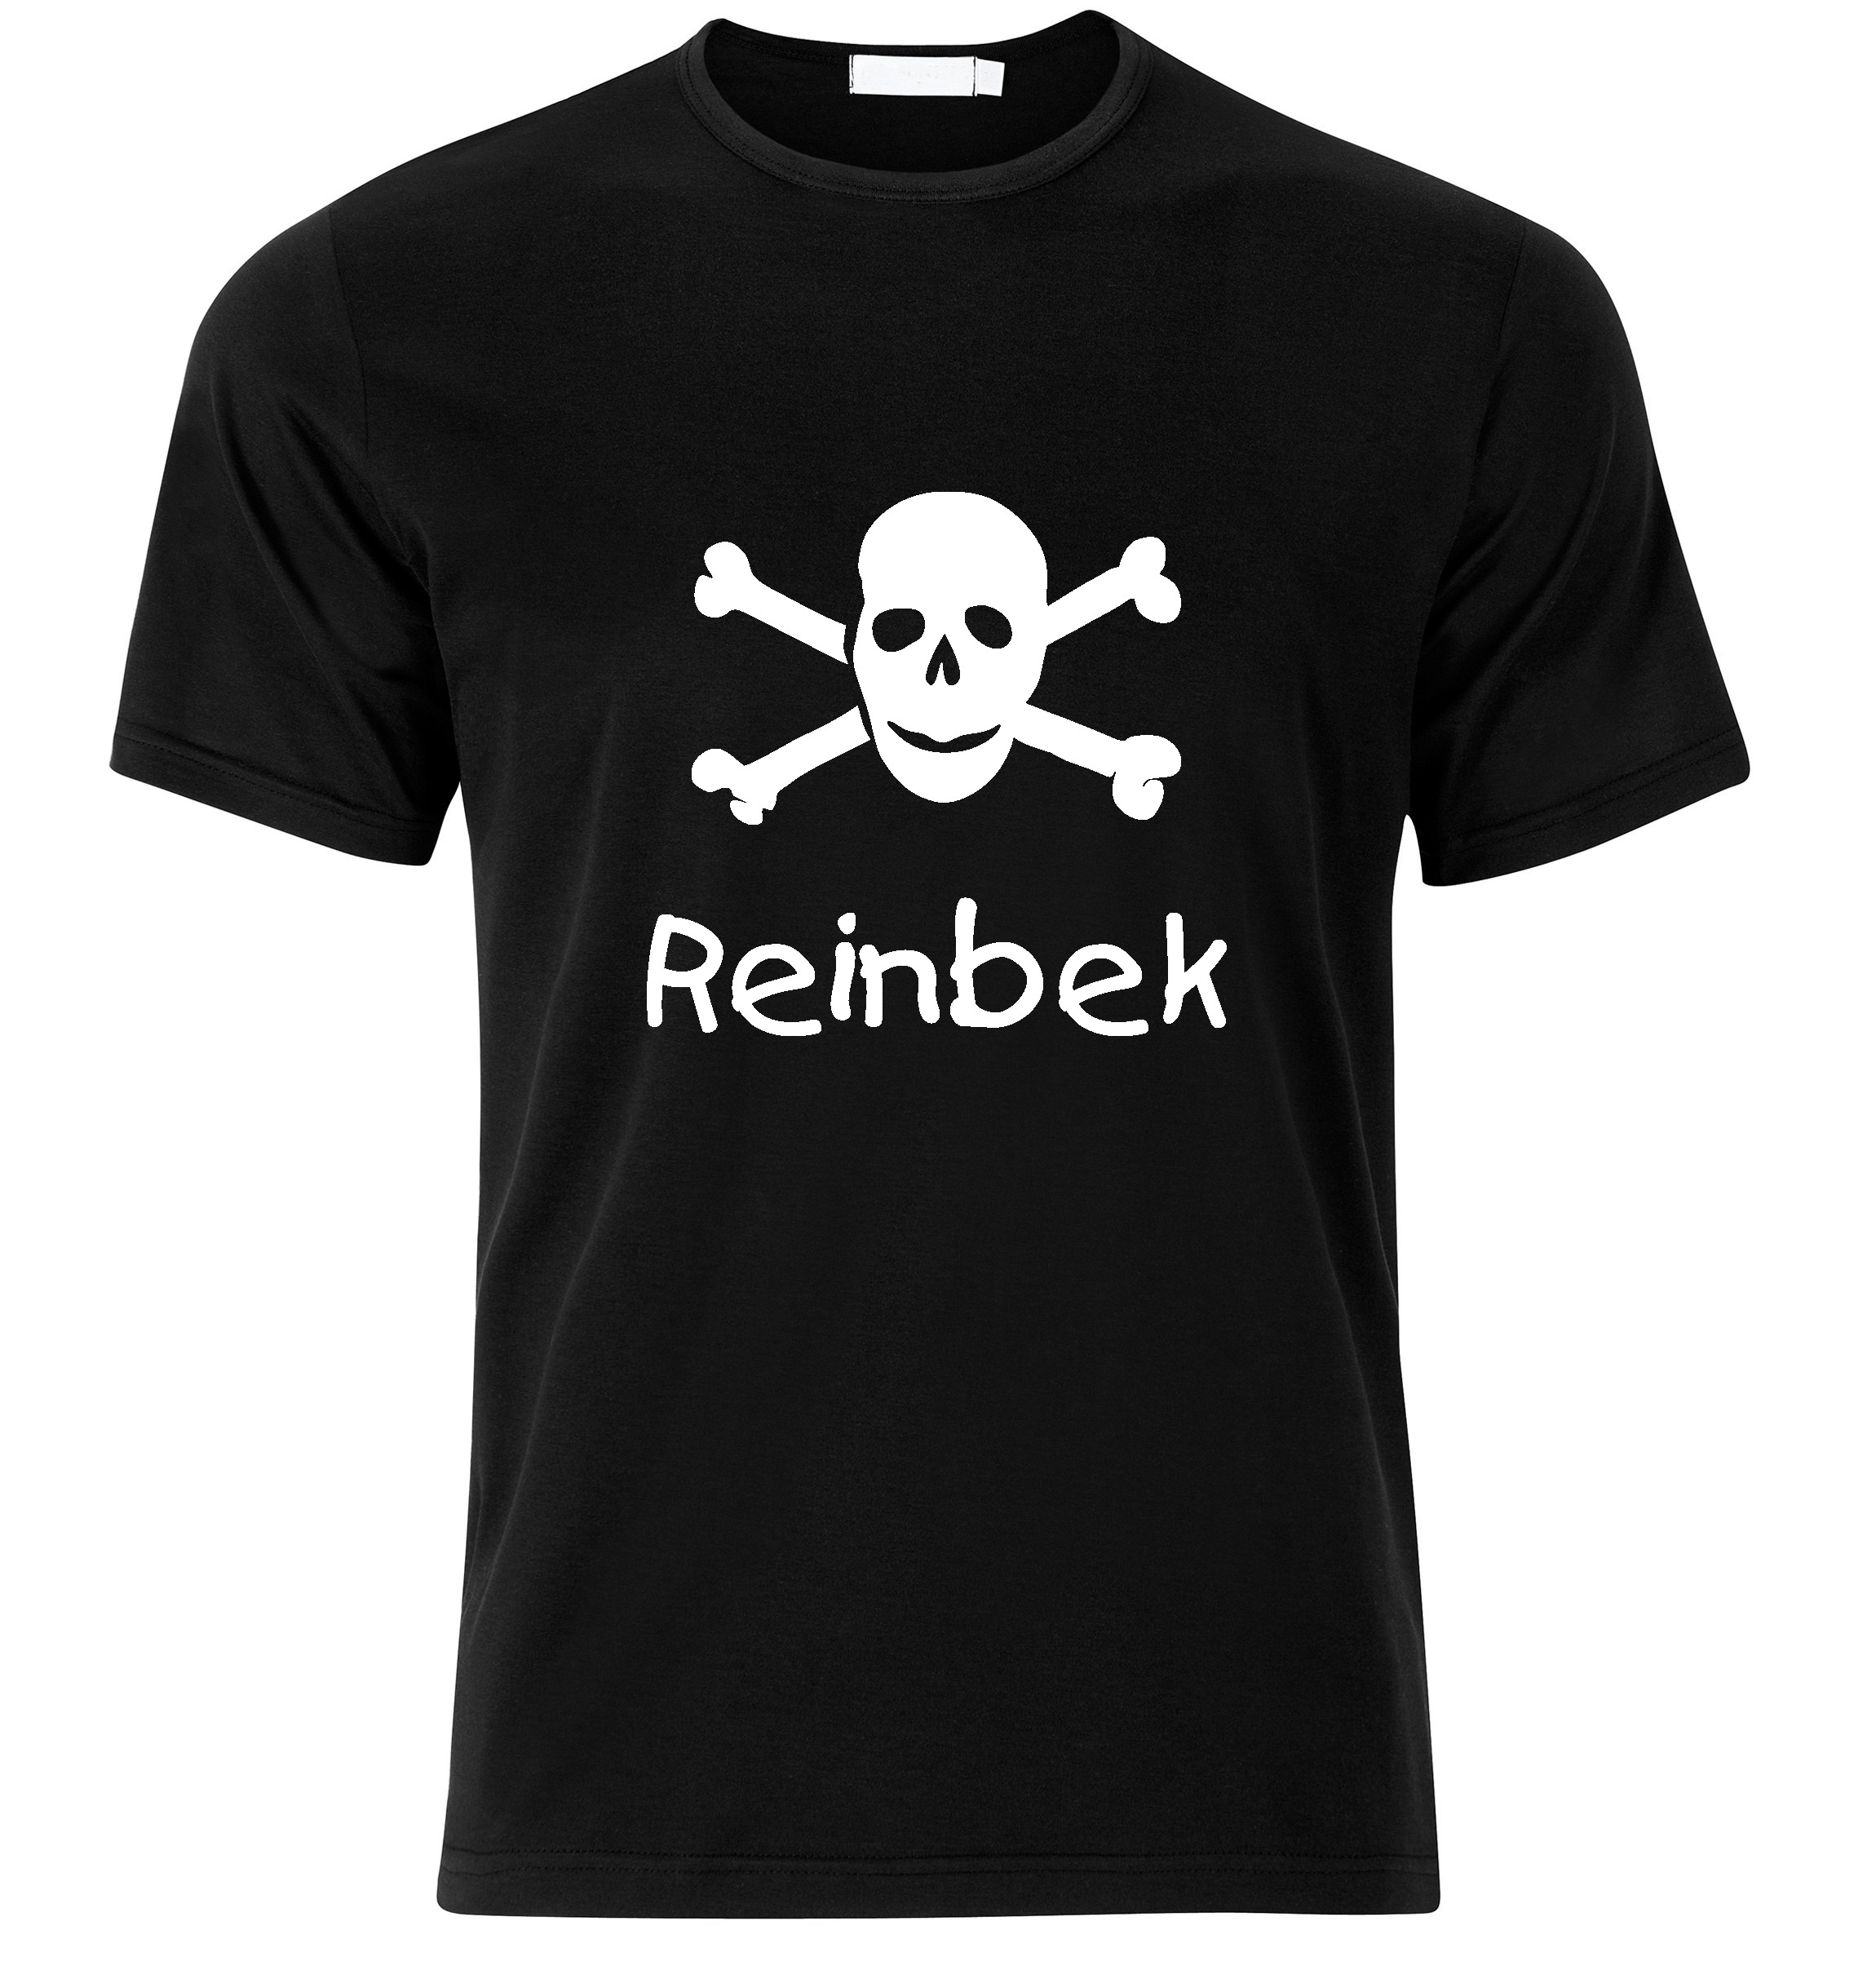 T-Shirt Reinbek Jolly Roger, Totenkopf